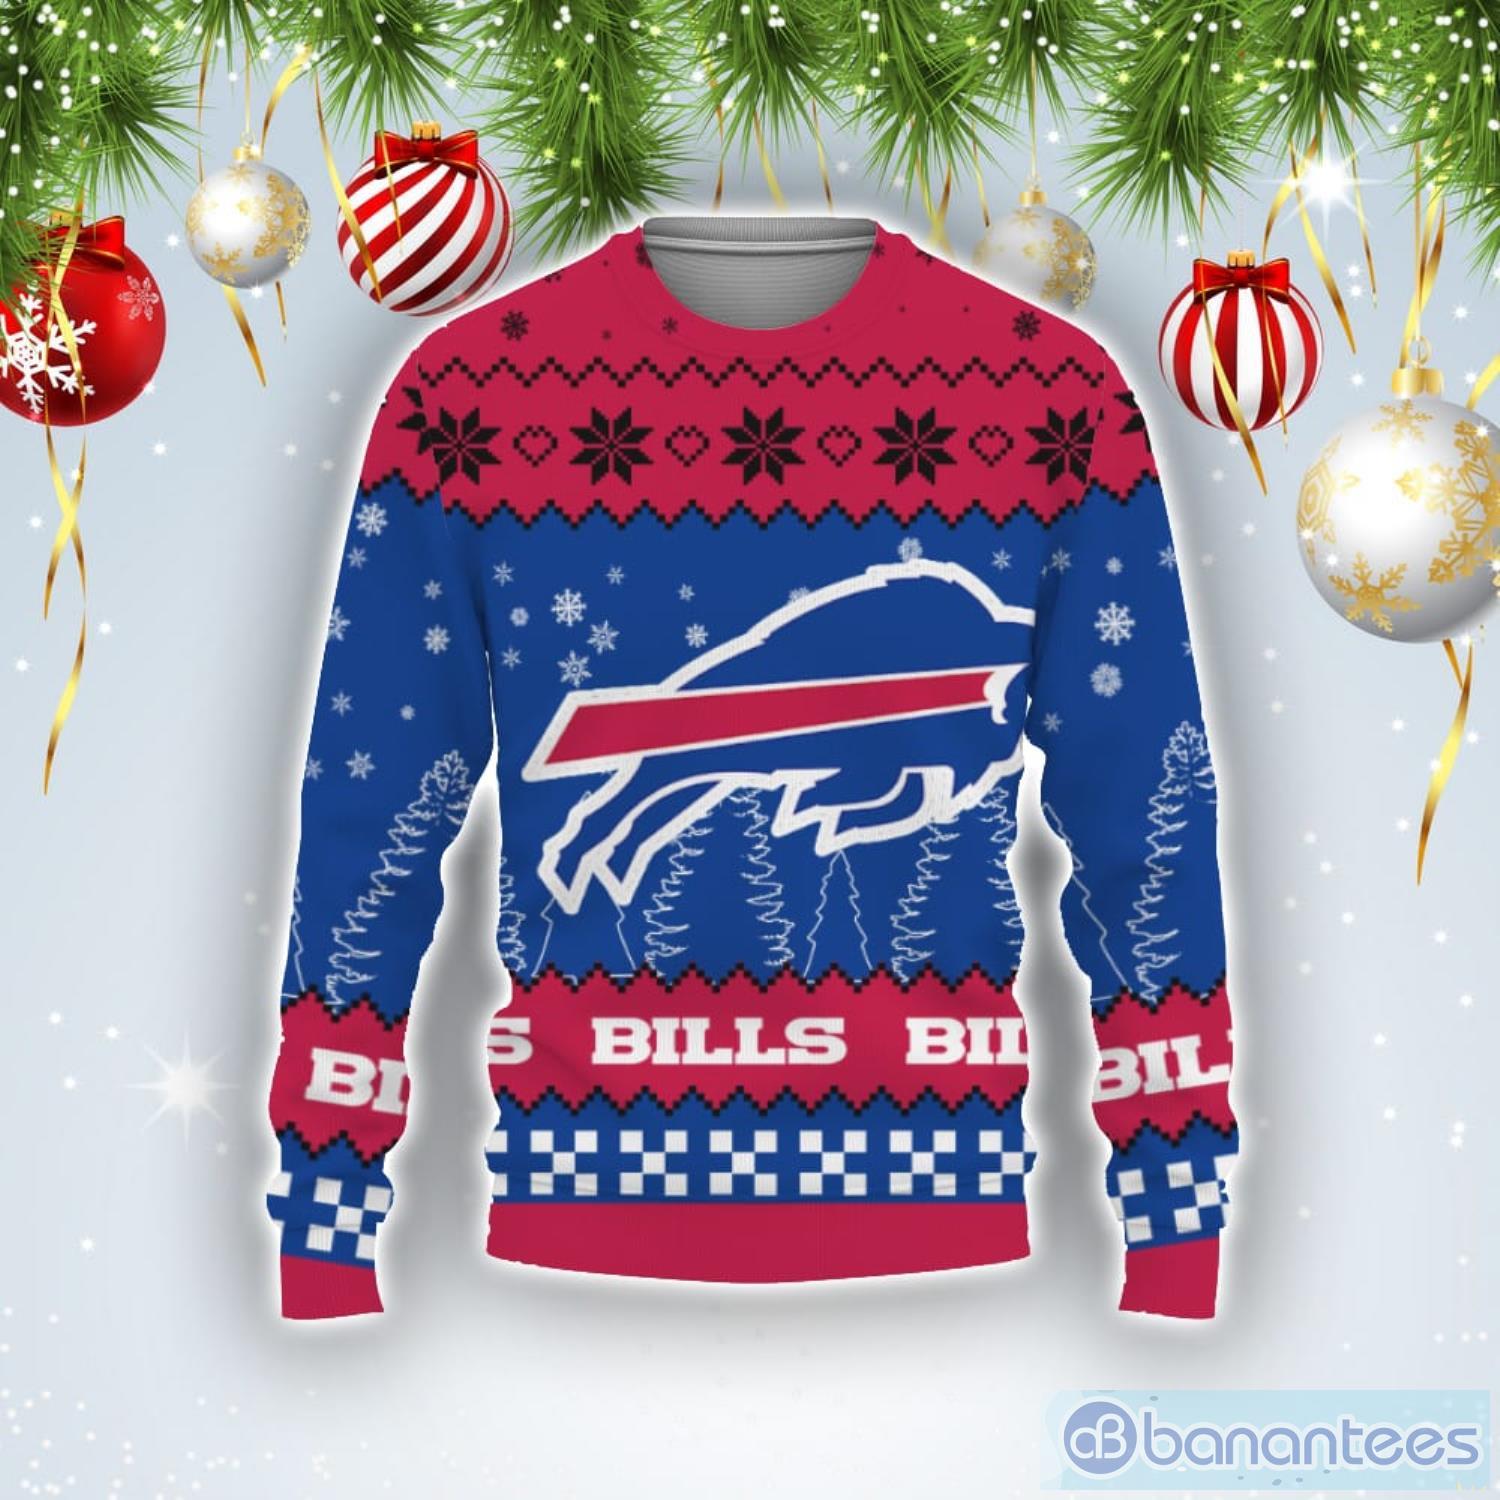 Buffalo-Bills-nfl-3D-ugly-sweaterChristmas-Tree-Ugly-Christmas-Sweater-Gifts-For-Fan